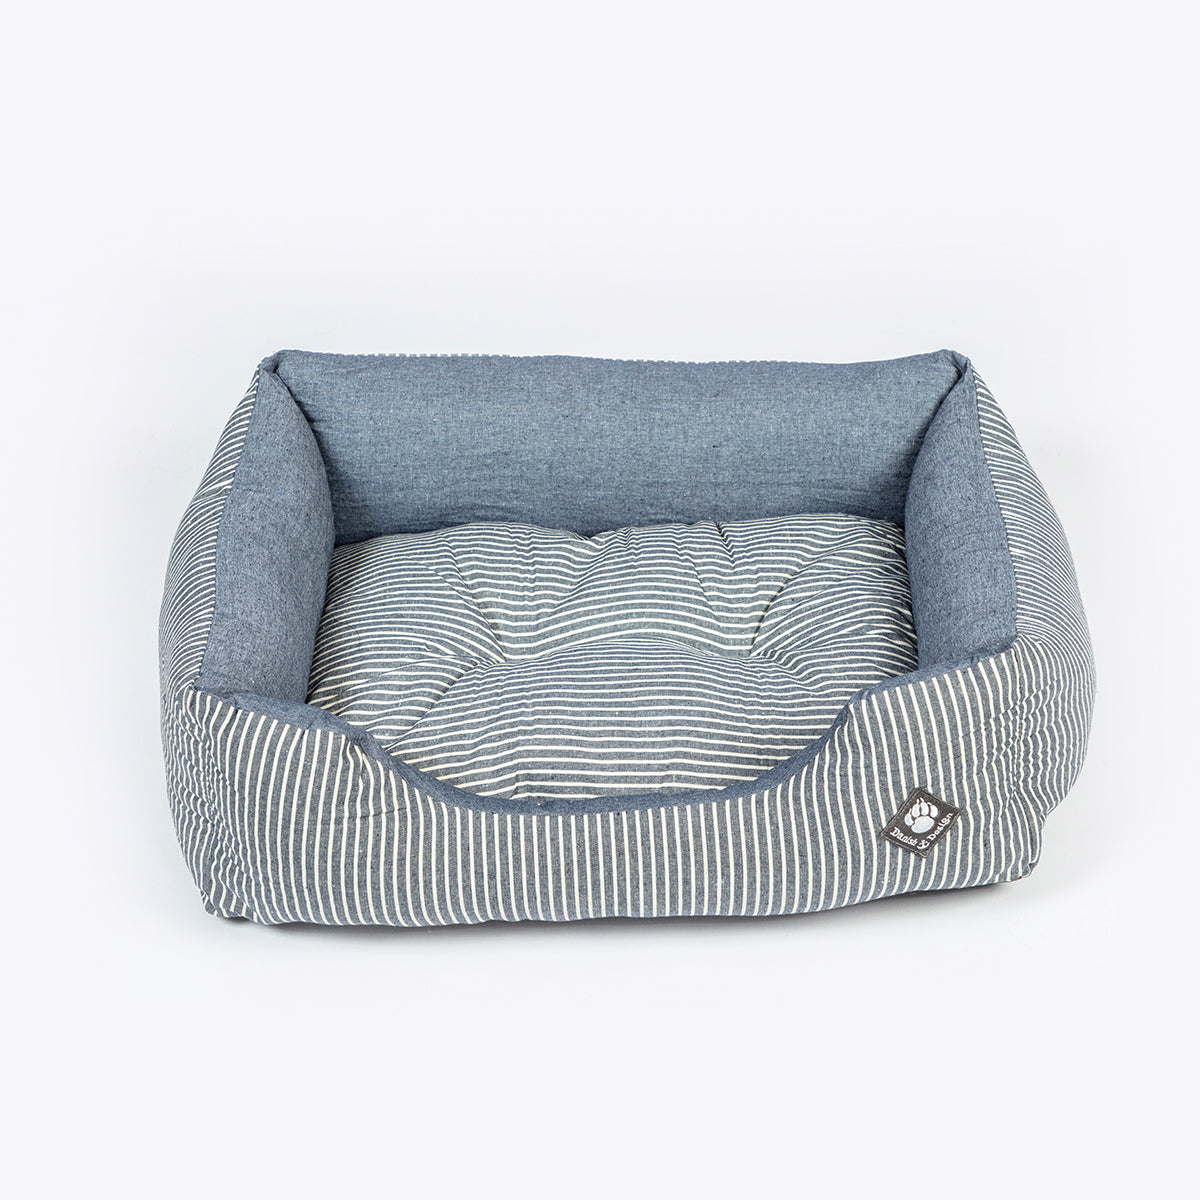 Image of Danish Design Maritime Blue Snuggle Dog Bed - Large 34 inches